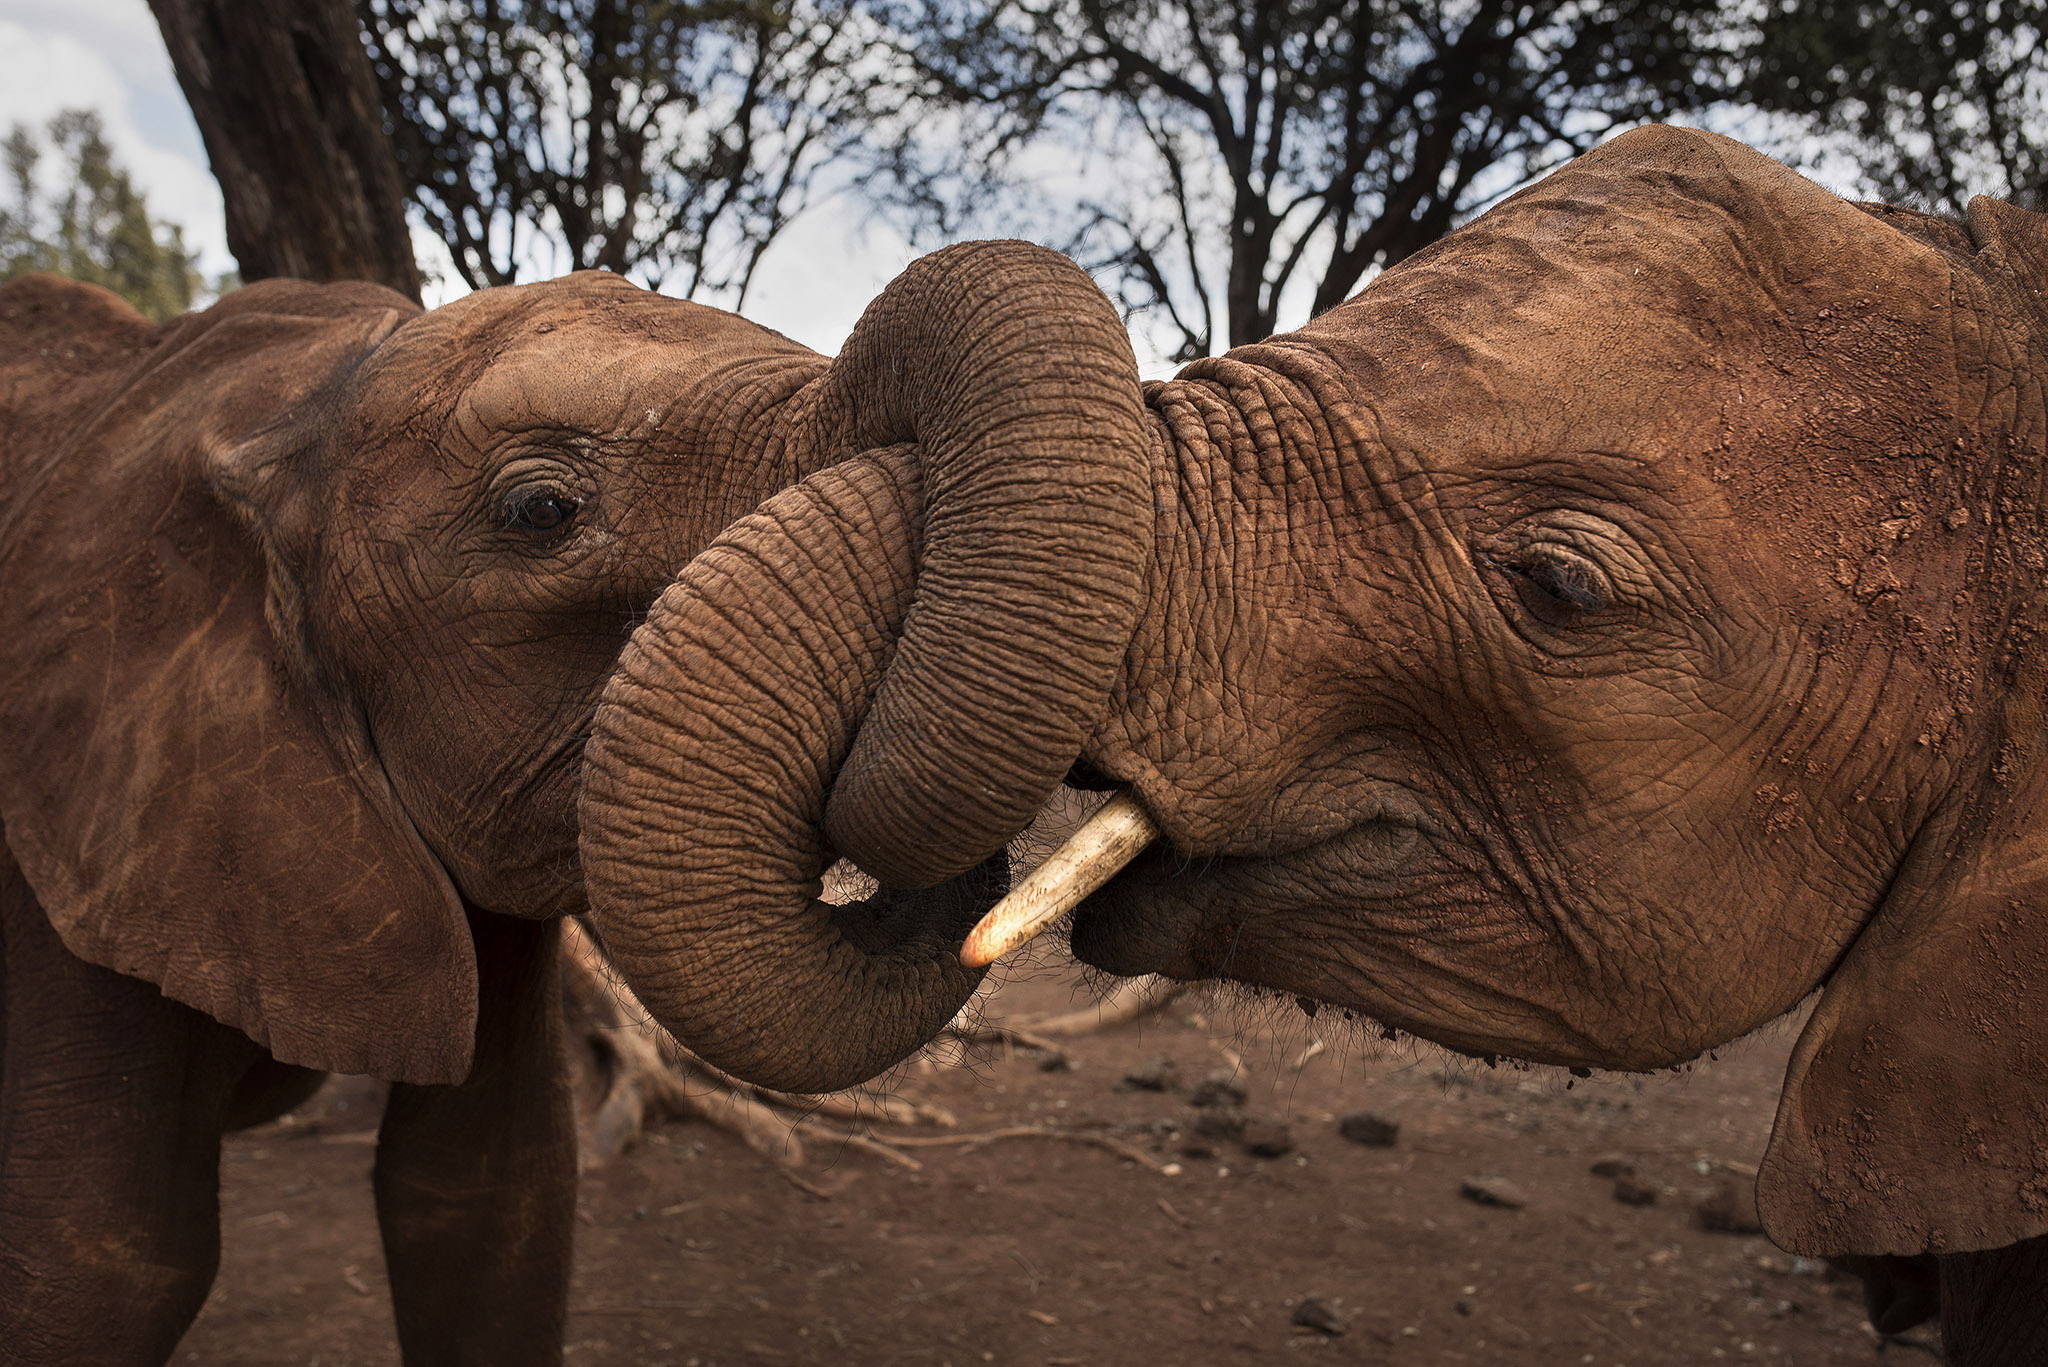 In photo: Elephants of Kenya